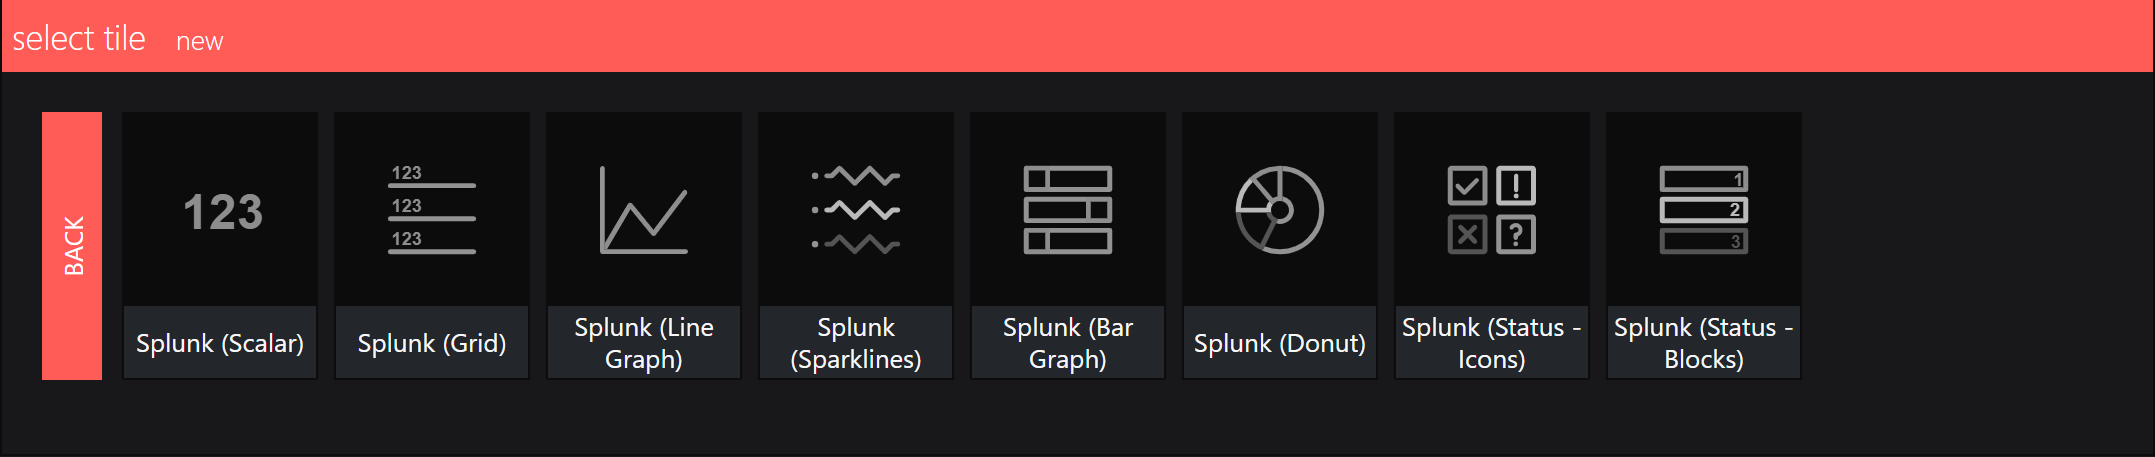 splunk integration - select a visual